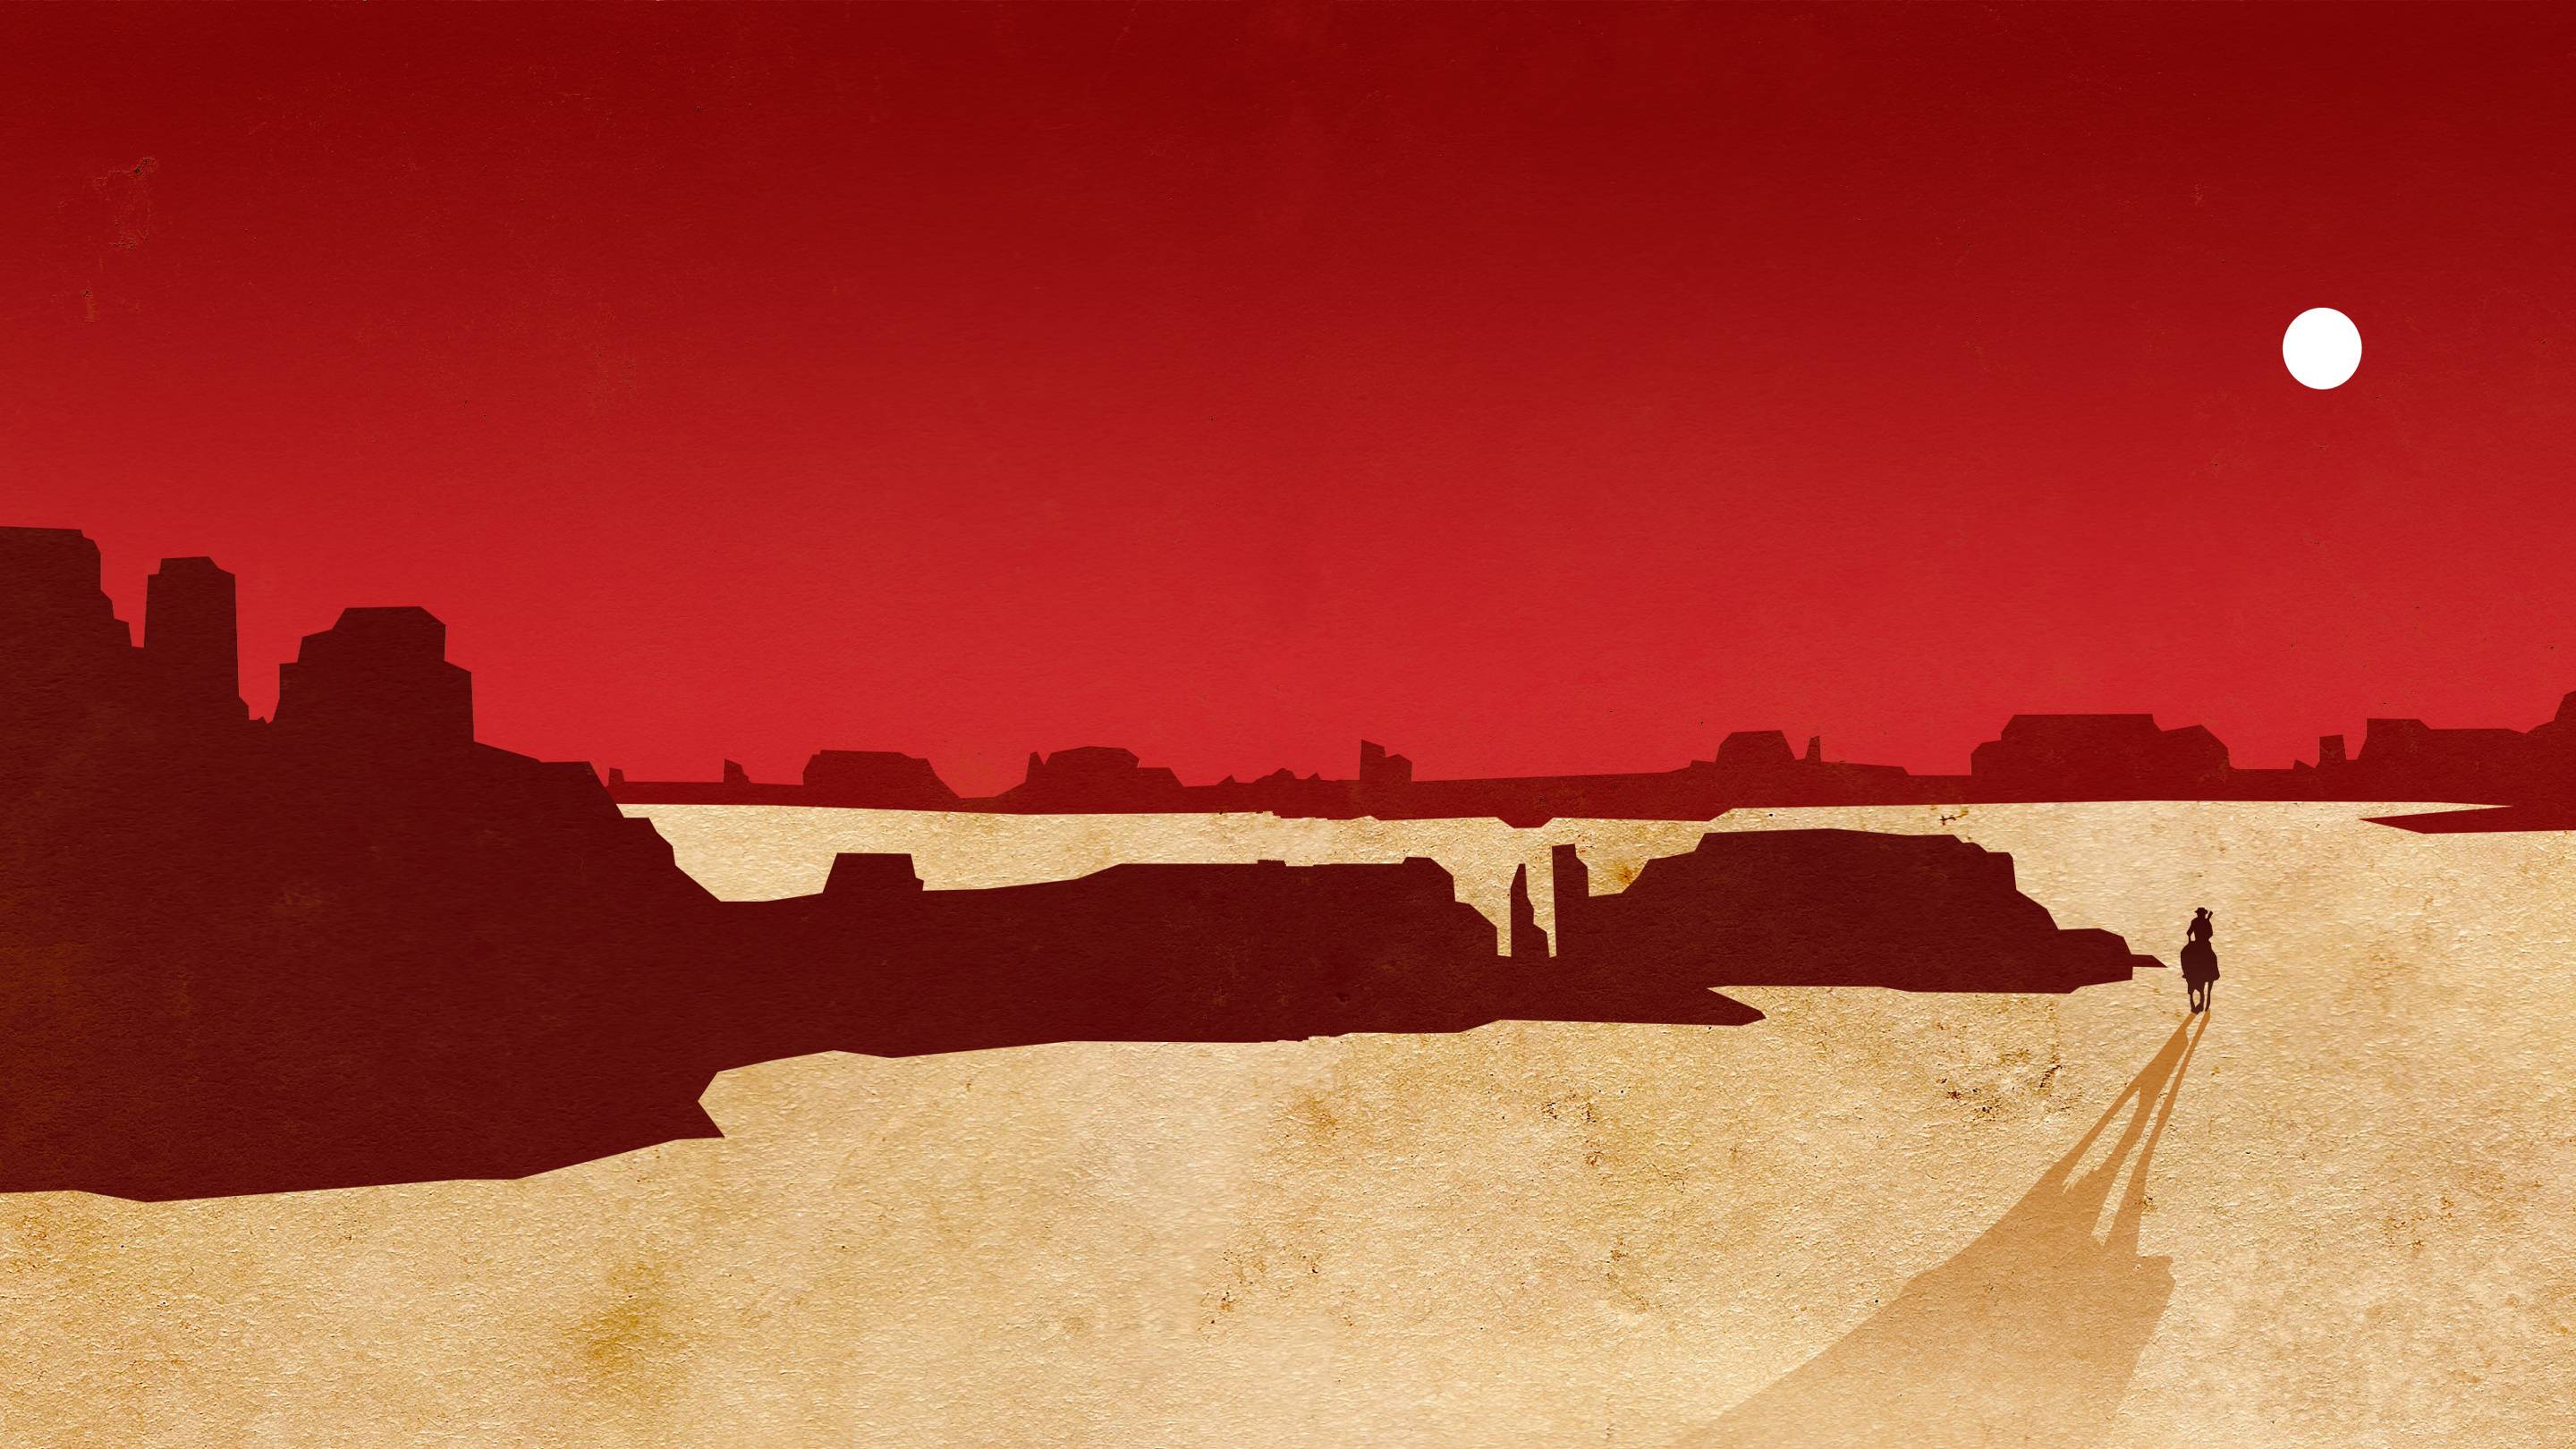  Red Dead Redemption Desktop Wallpaper